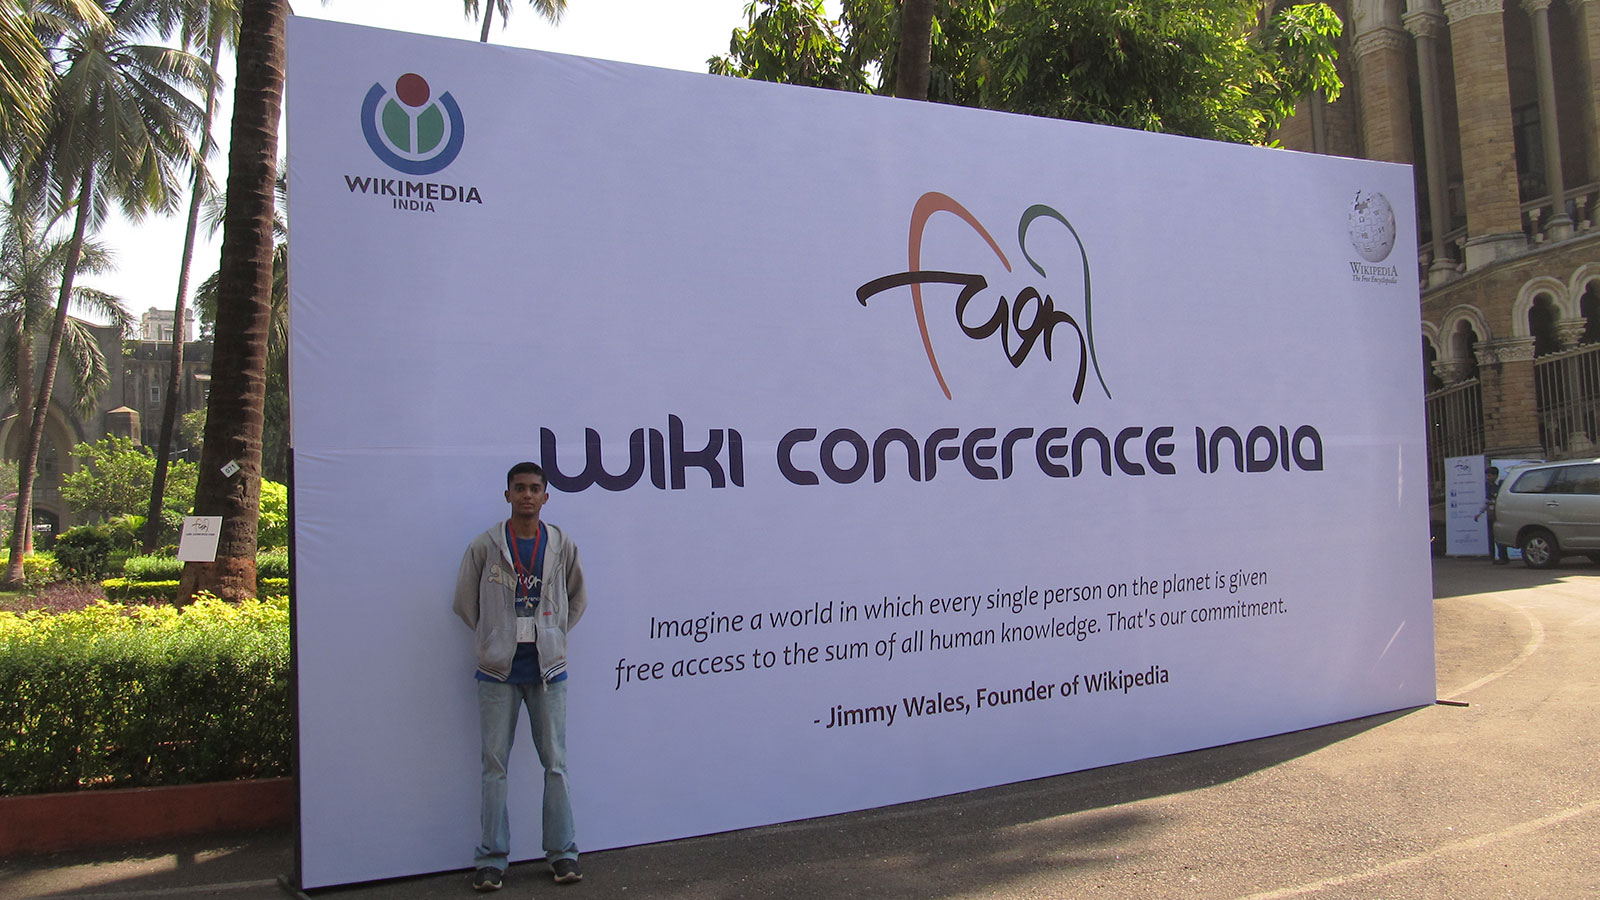 Neeraj Pattath at Wikipedia, WikiConference India Event - University of Mumbai, FORT - 2011